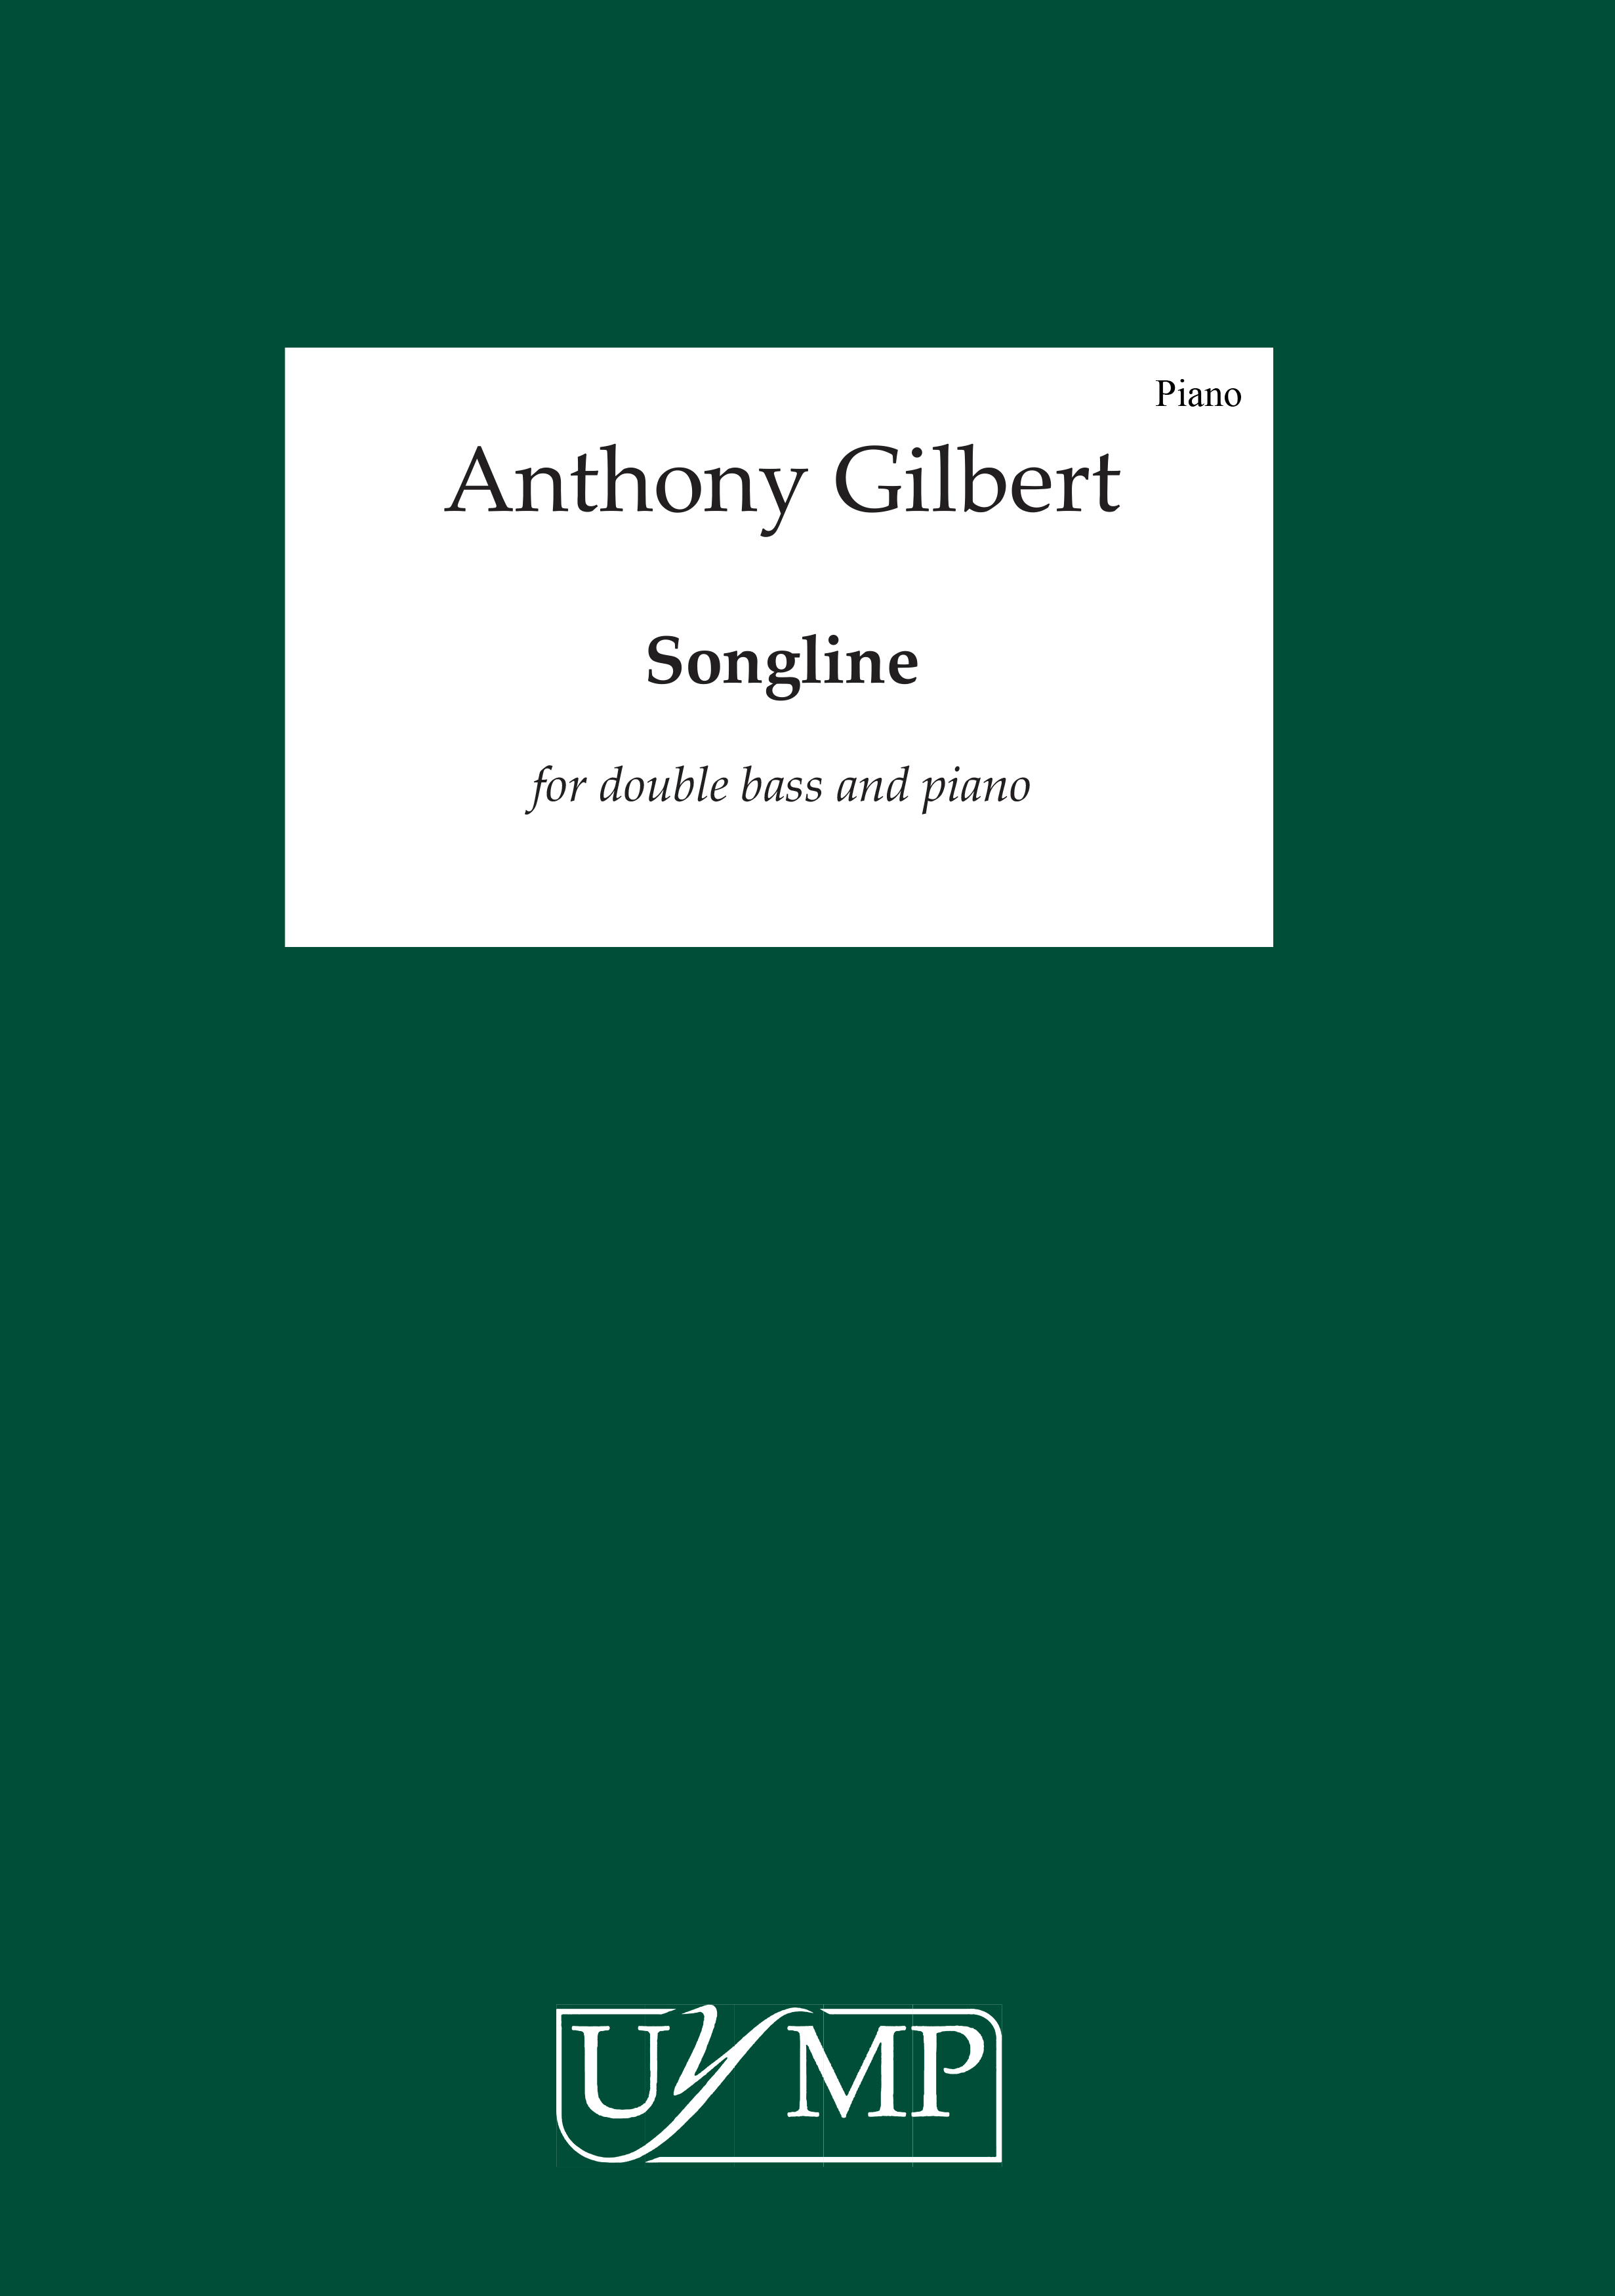 Anthony Gilbert: Songline